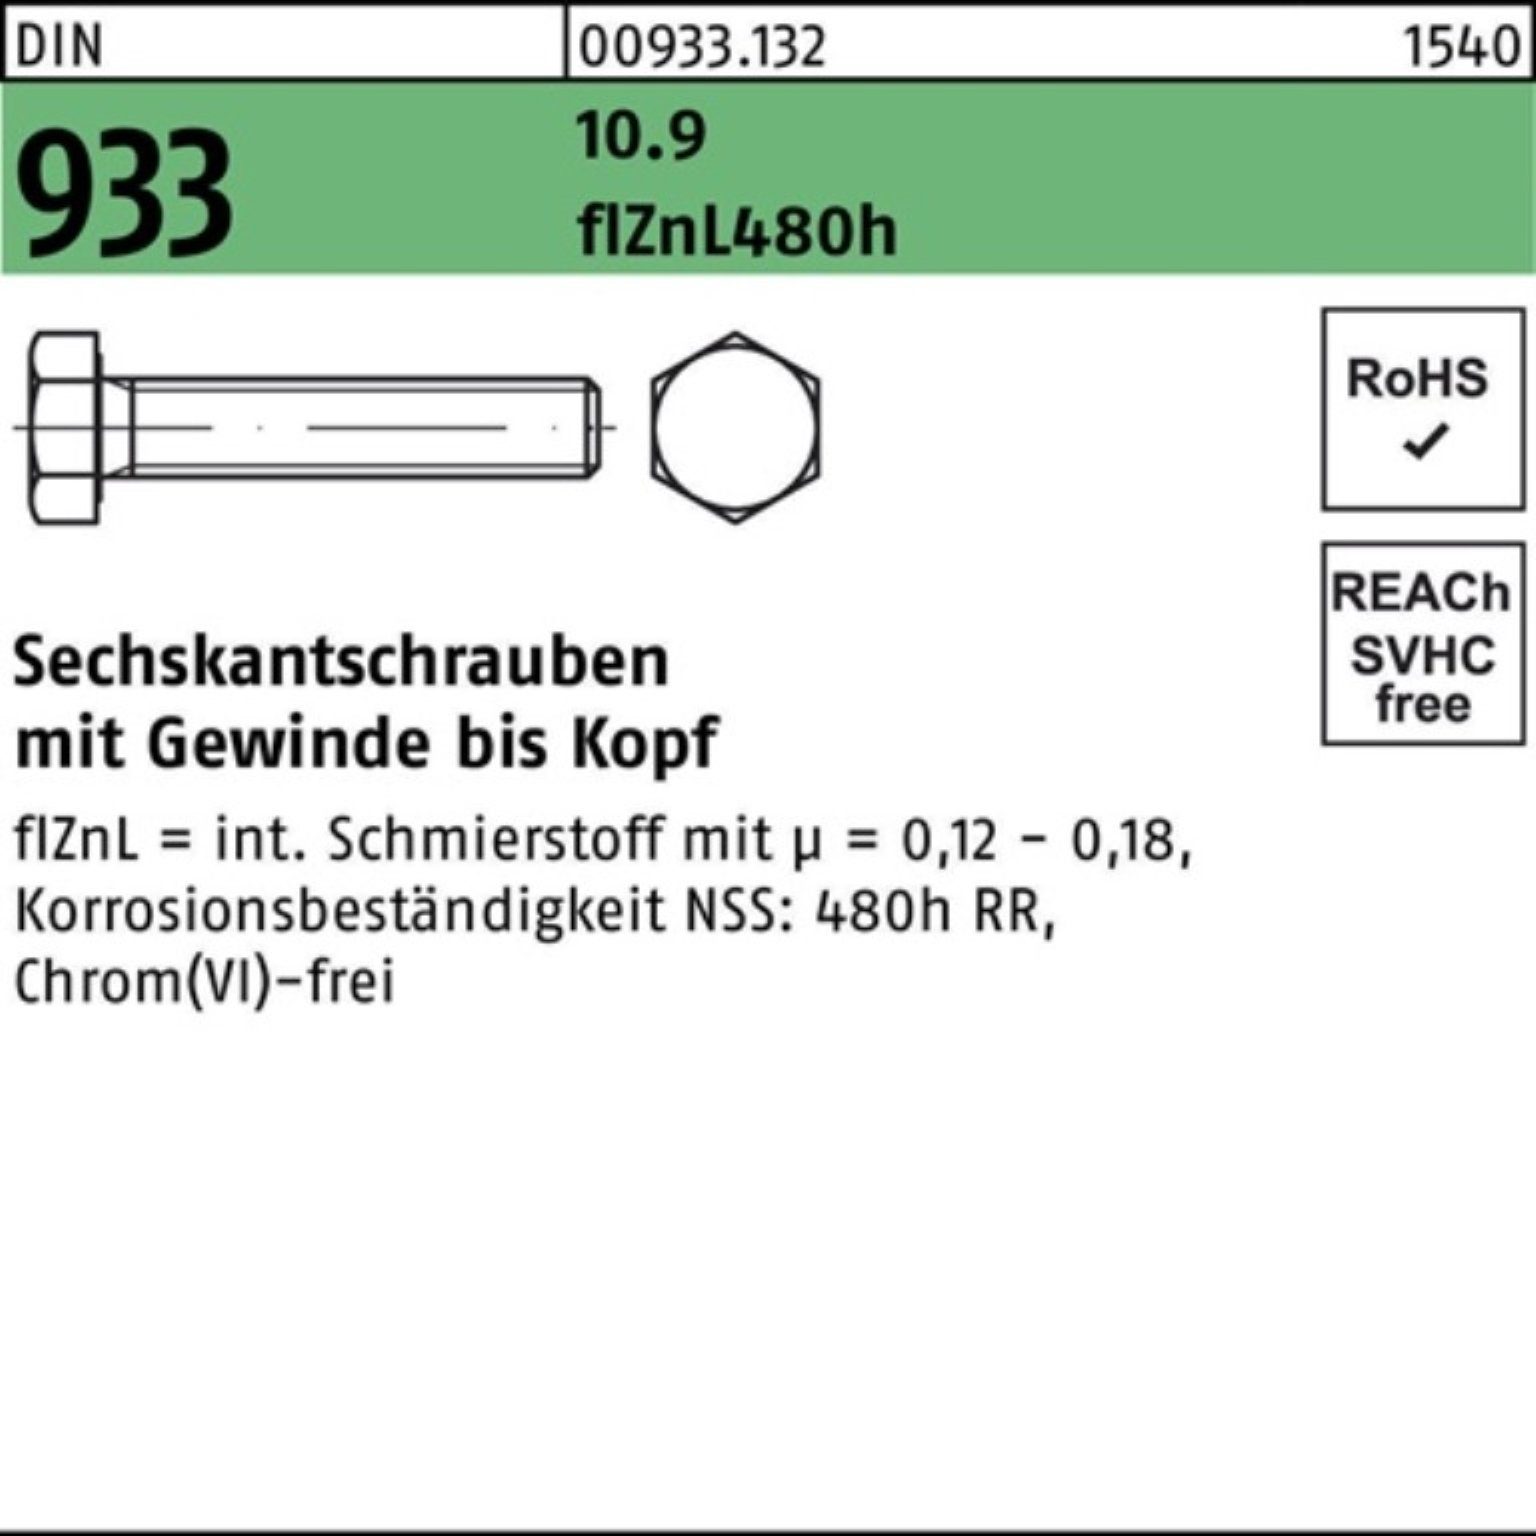 10.9 55 DIN Pack Reyher Sechskantschraube VG Sechskantschraube 100er M16x 933 flZnL/nc/x/x/480h